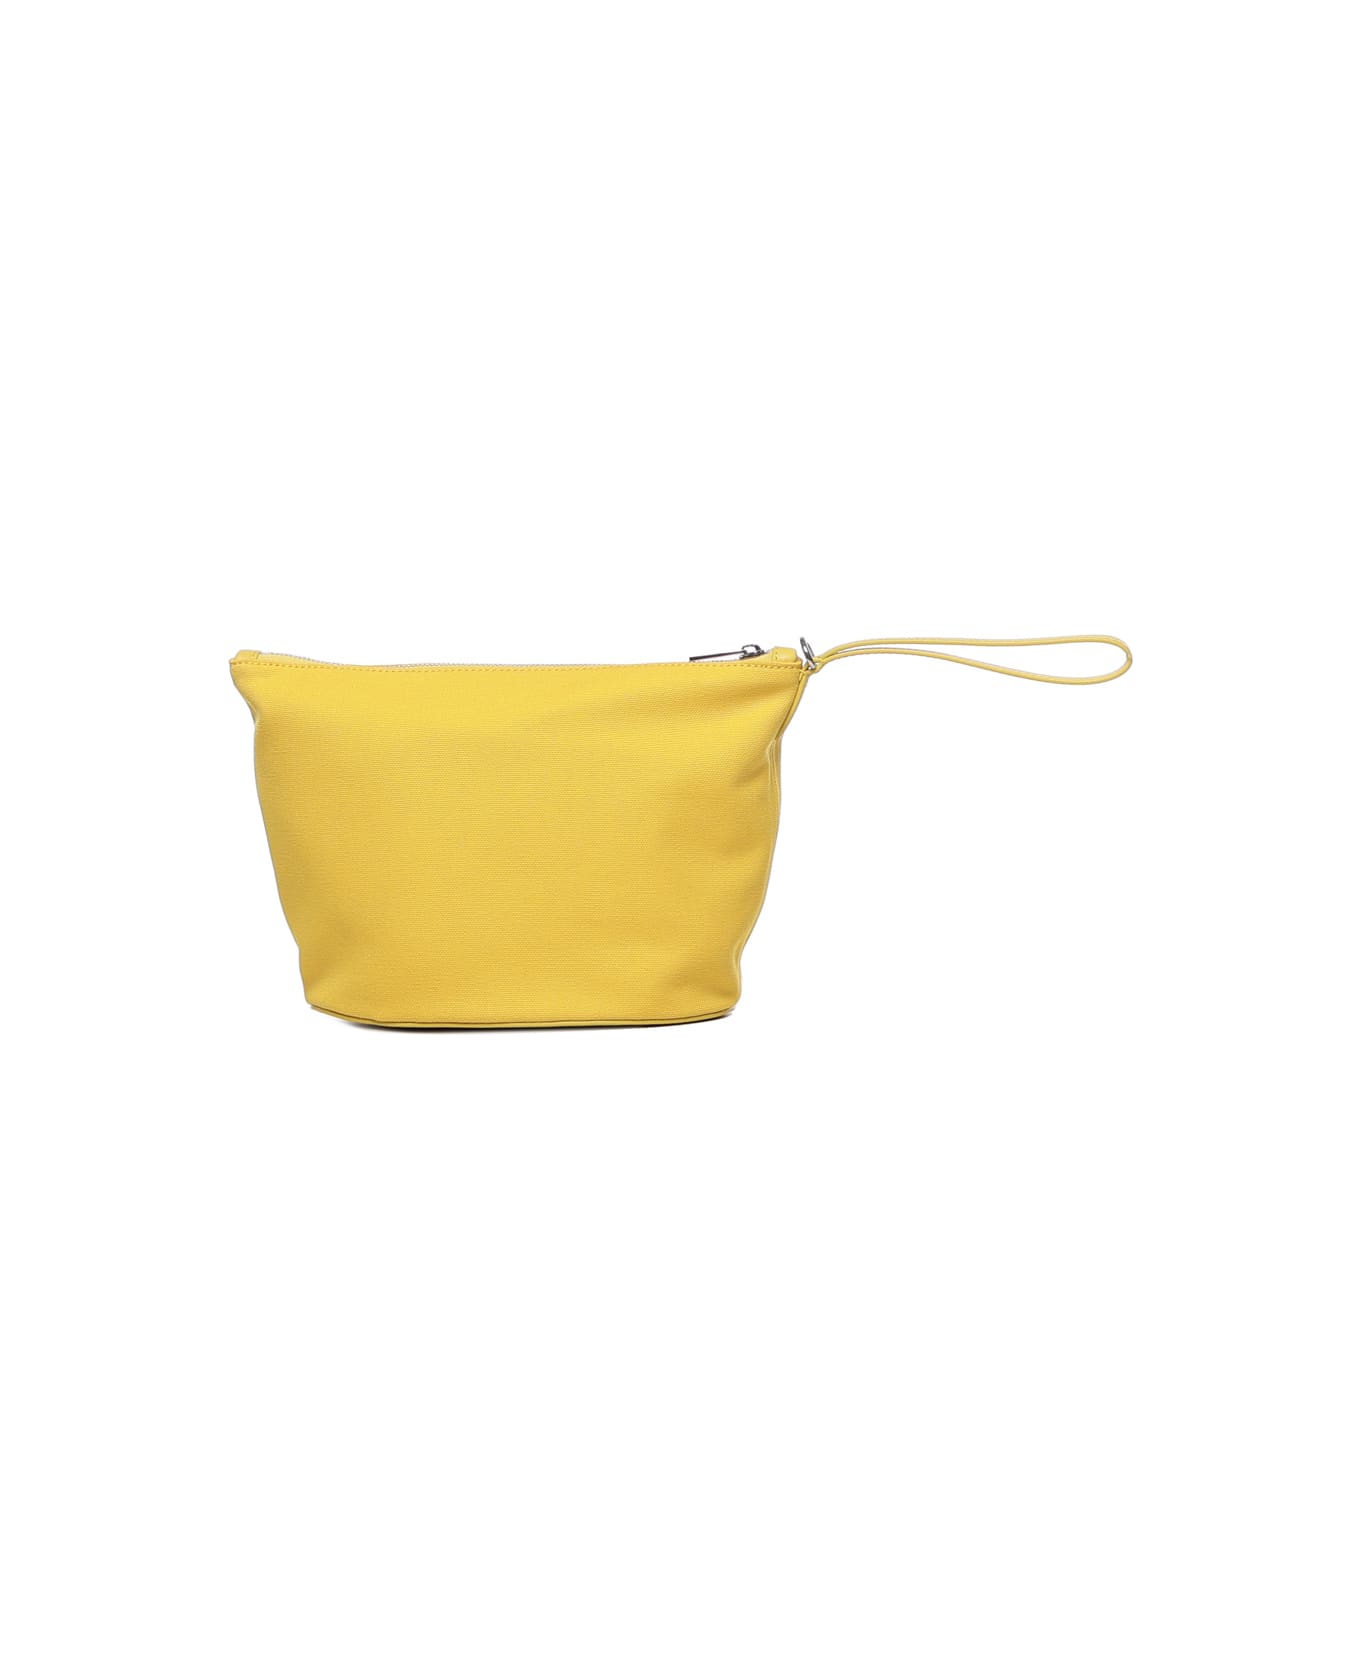 Loewe X Paula's Ibiza Cosmetic Bag - Yellow クラッチバッグ